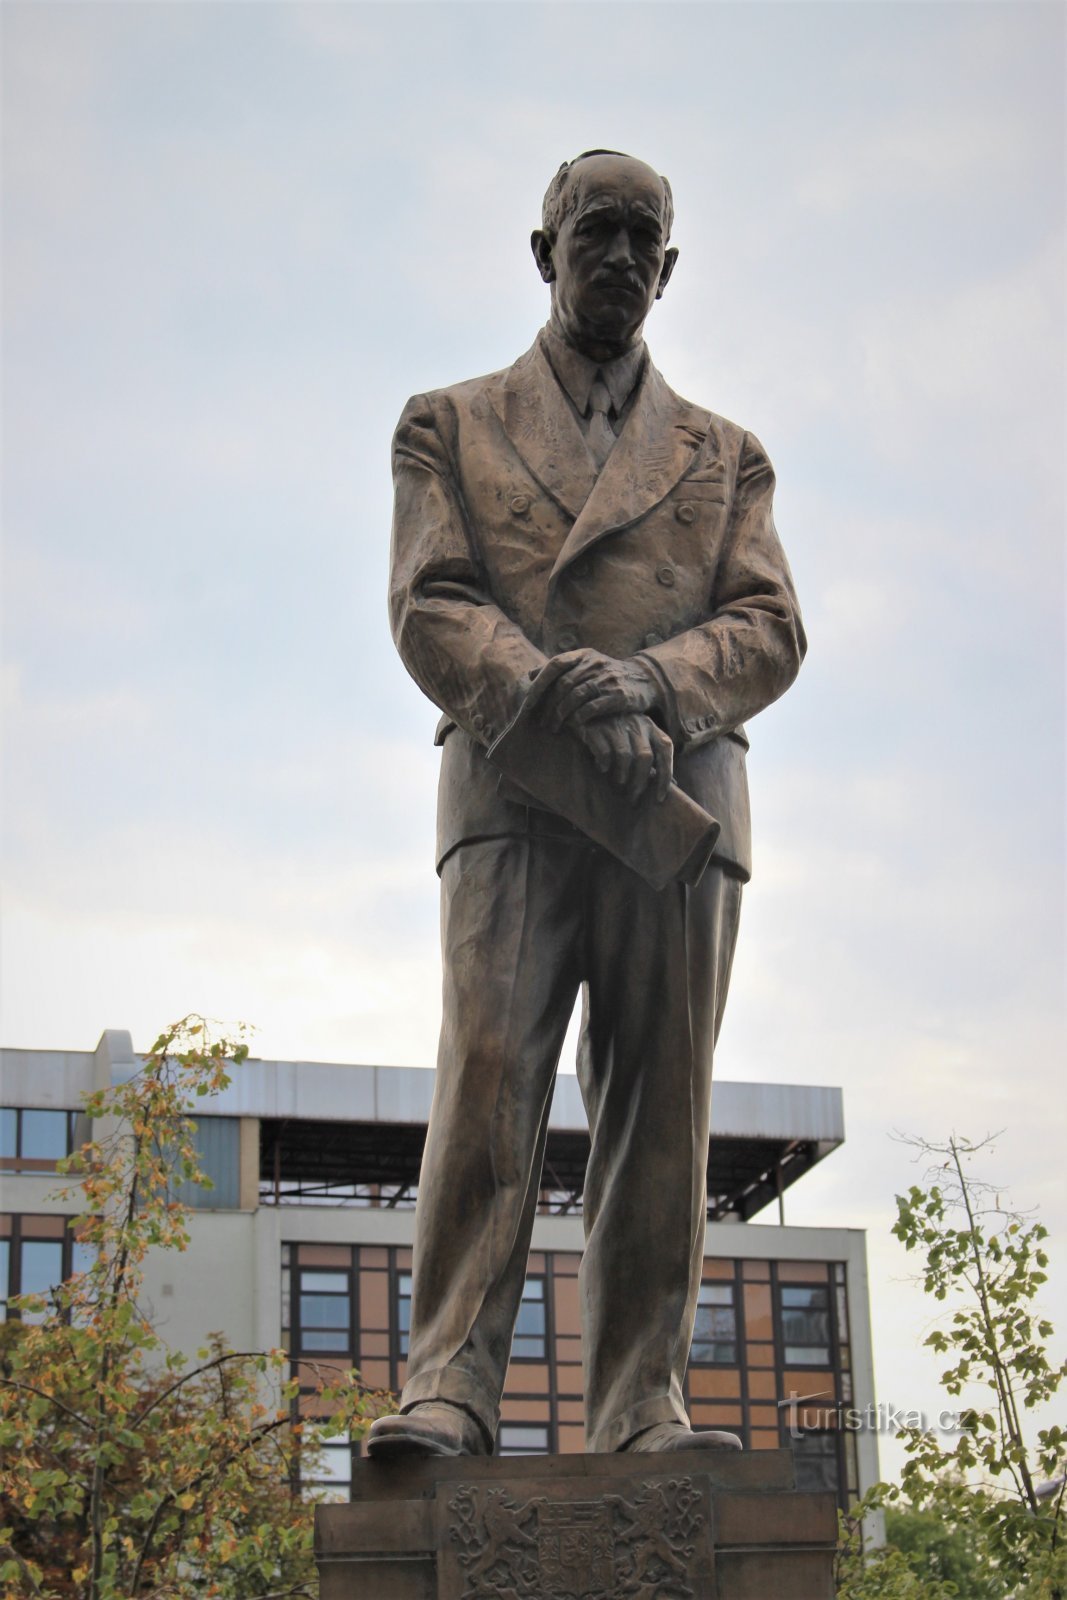 Statuia lui Edvard Beneš